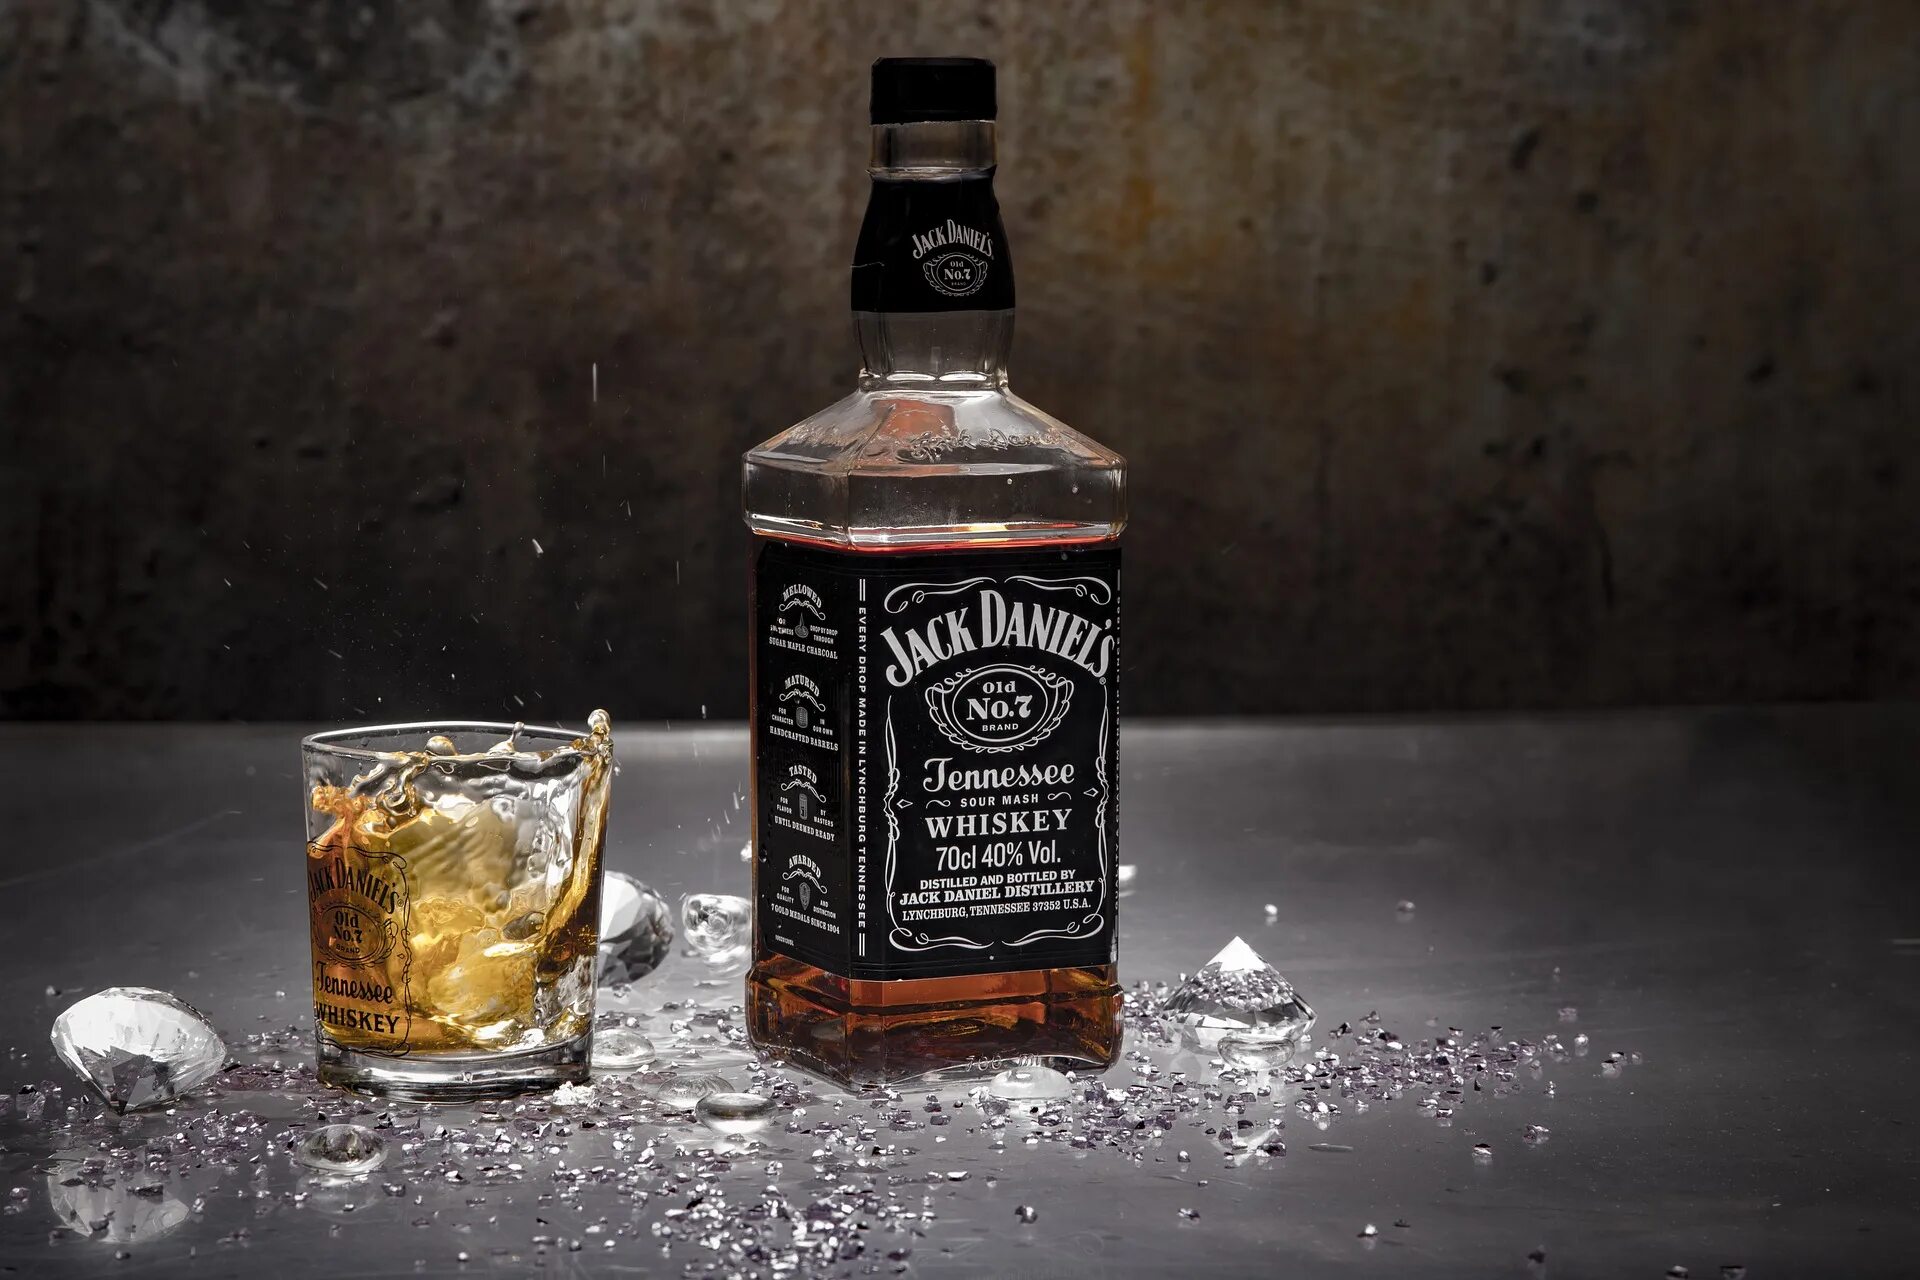 Джек дэниэлс это. Виски Джек Дэниэлс. Американские виски Джек Дэниэлс. Виски Джек Дэниэлс эпл. Виски Джек Дэниэлс оригинал.